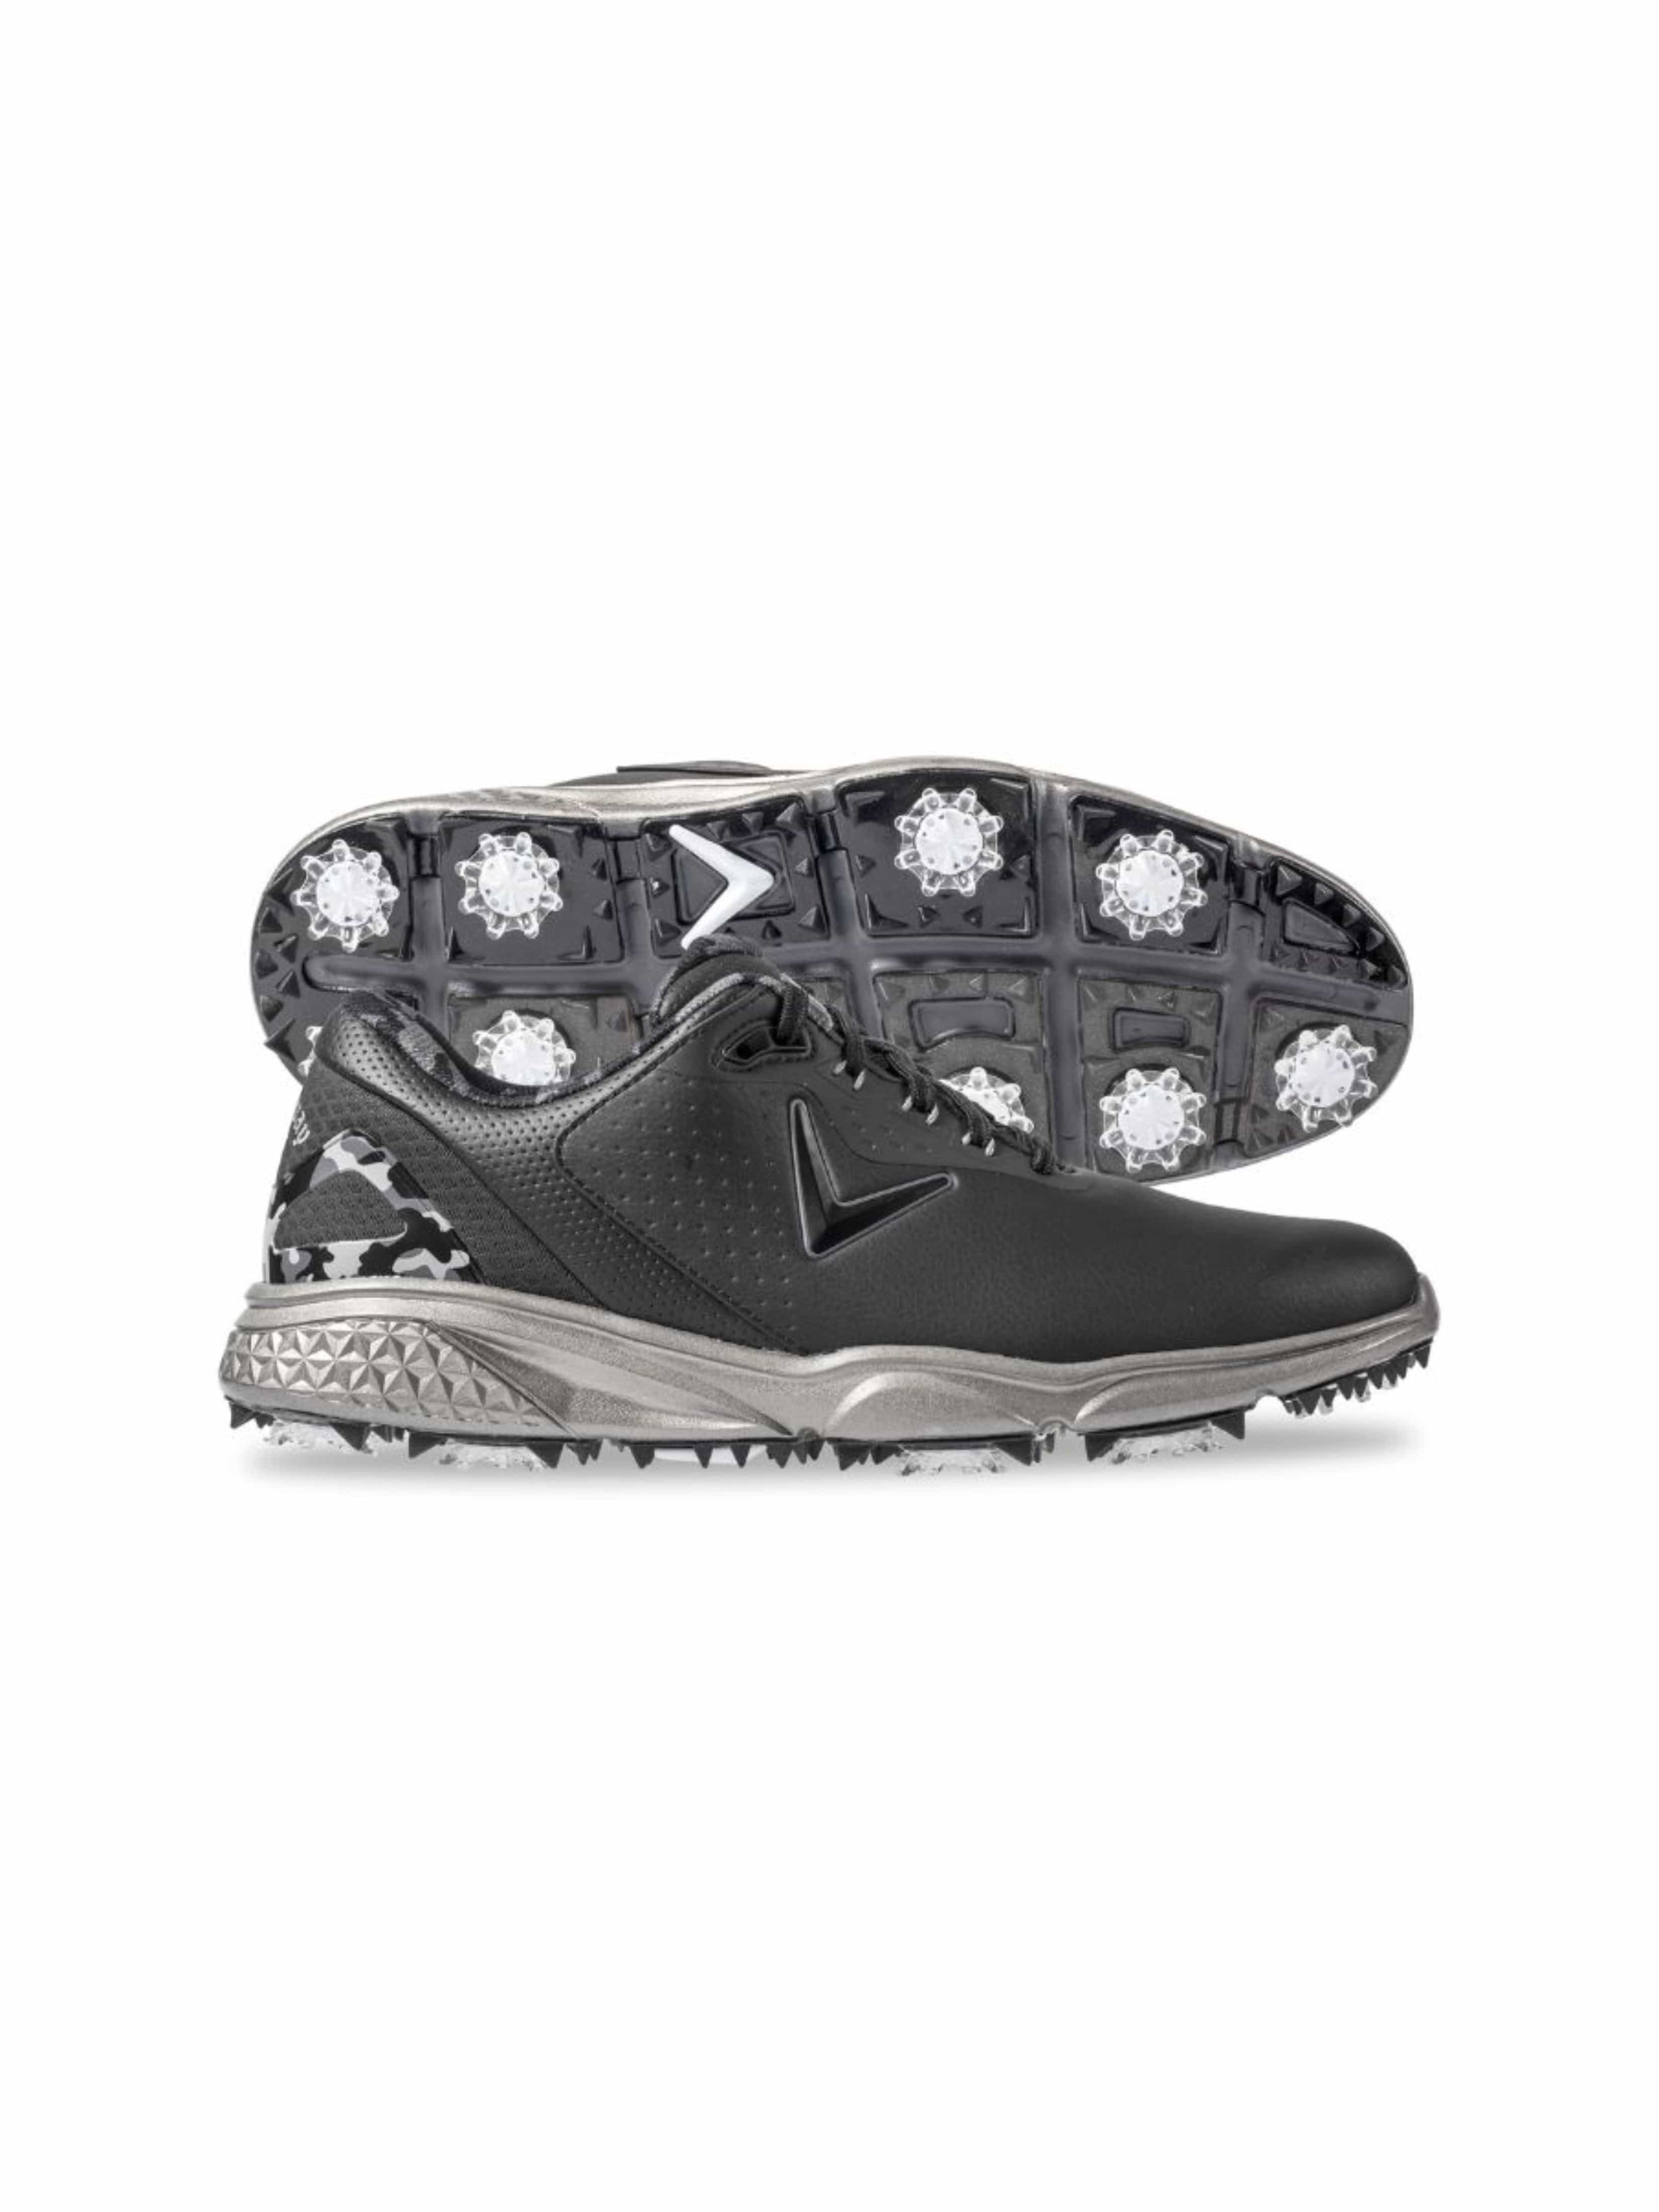 Callaway Apparel Mens Coronado V2 Golf Shoes, Size 11, Black, Polyurethane/Nylon | Golf Apparel Shop